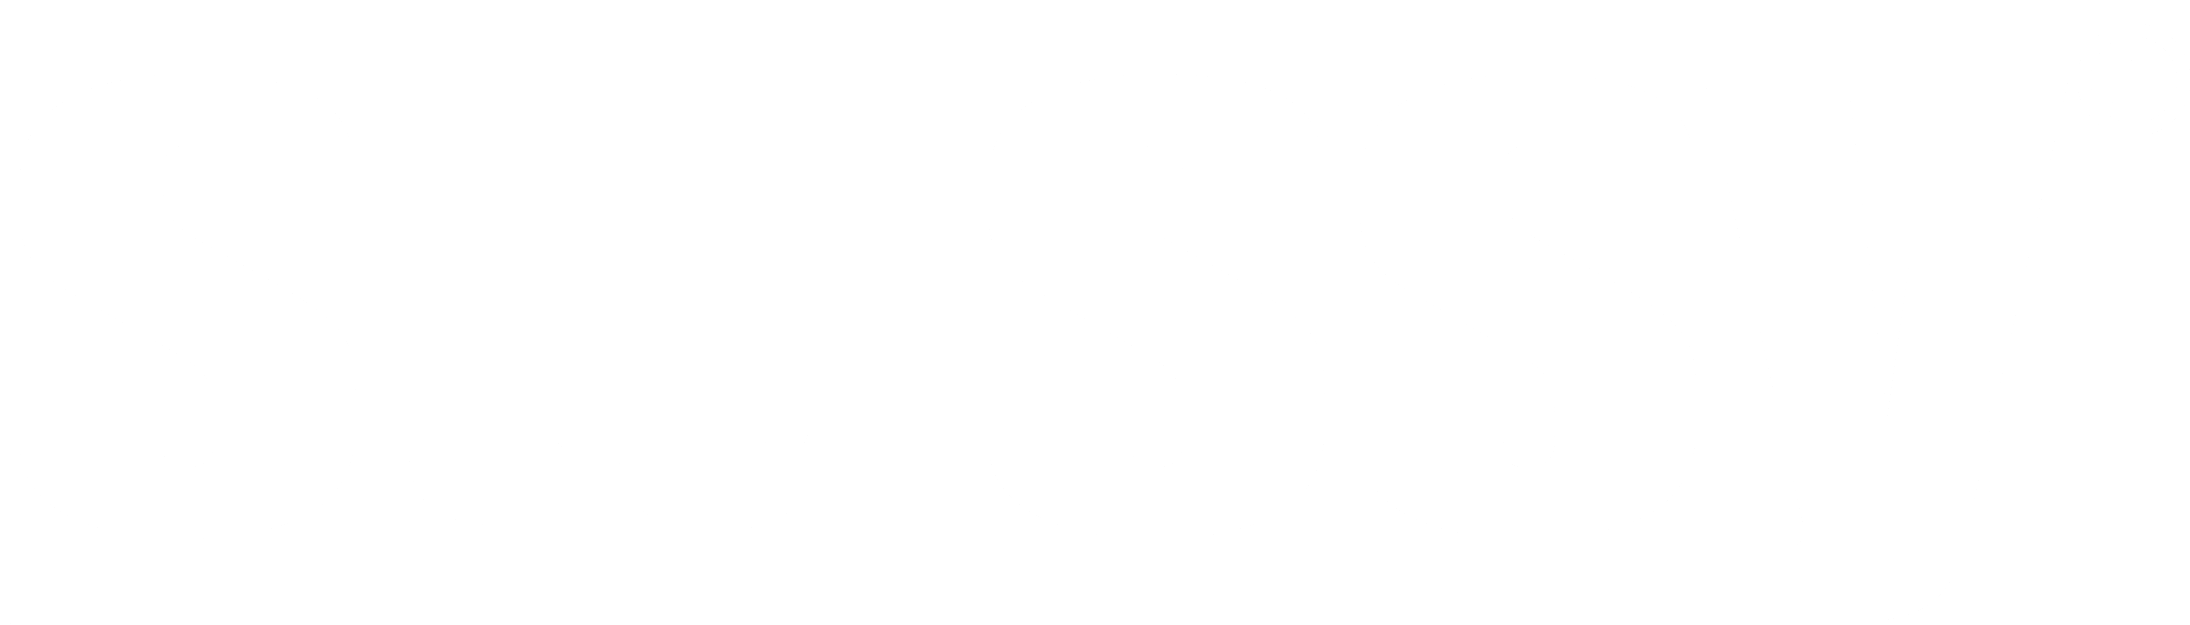 Stussy Logo Black And White